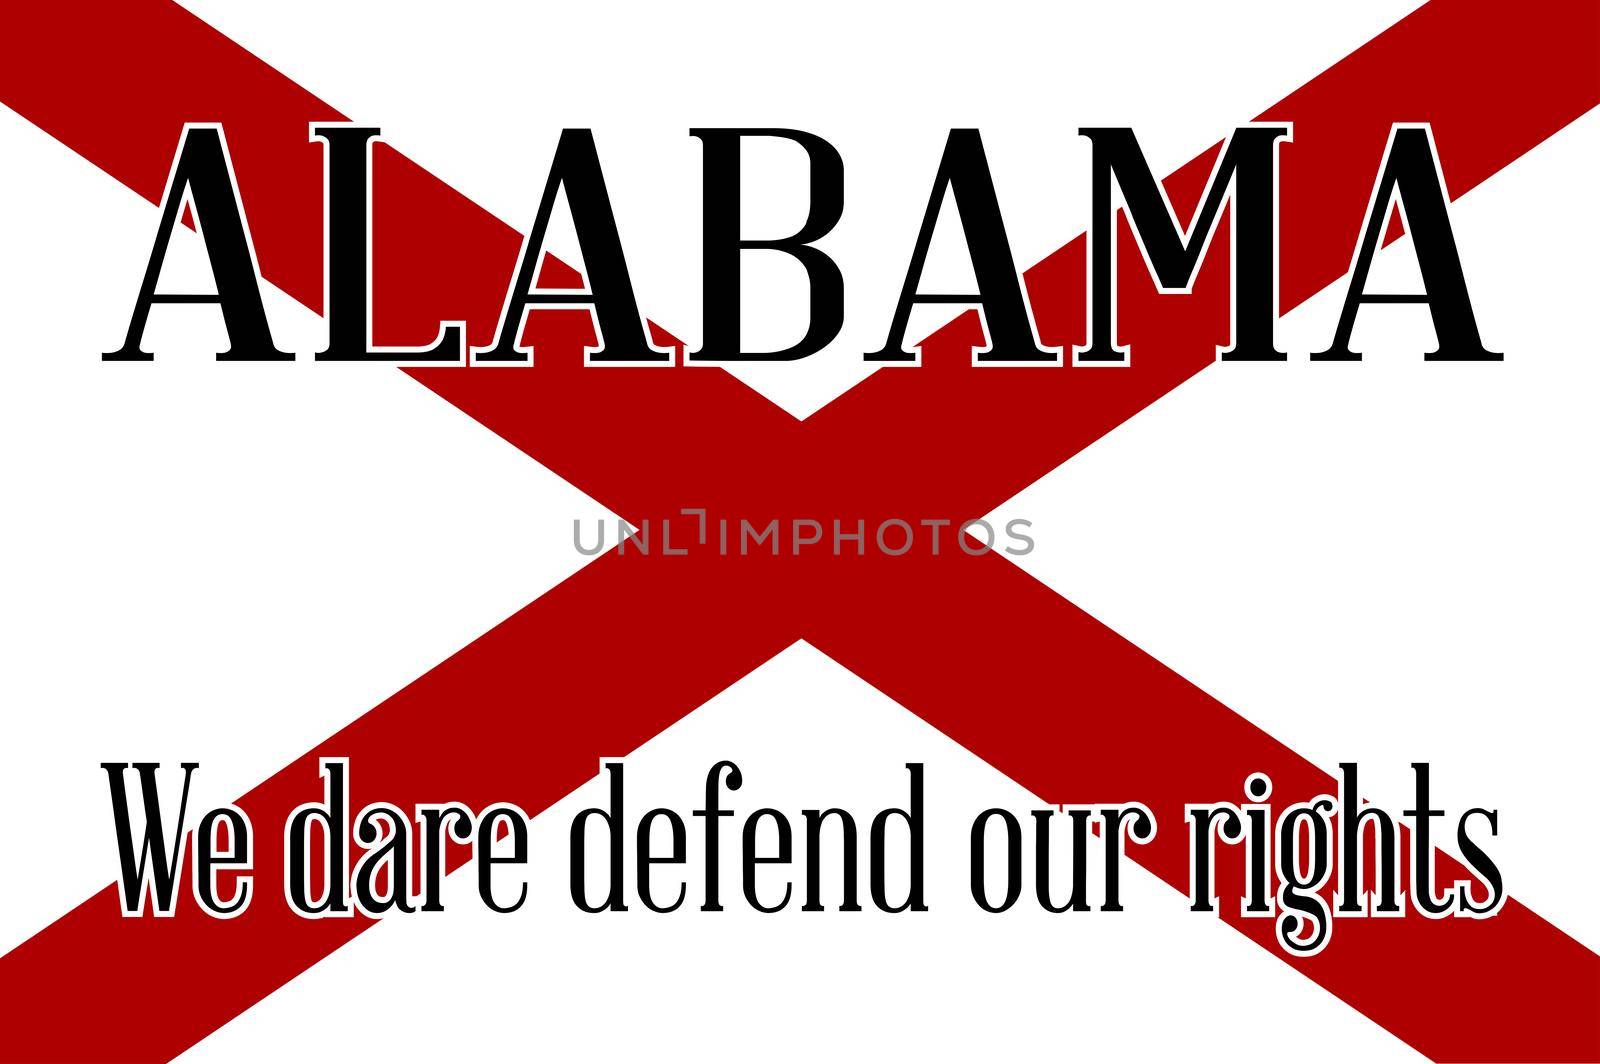 The flag of the United States stae Alabama